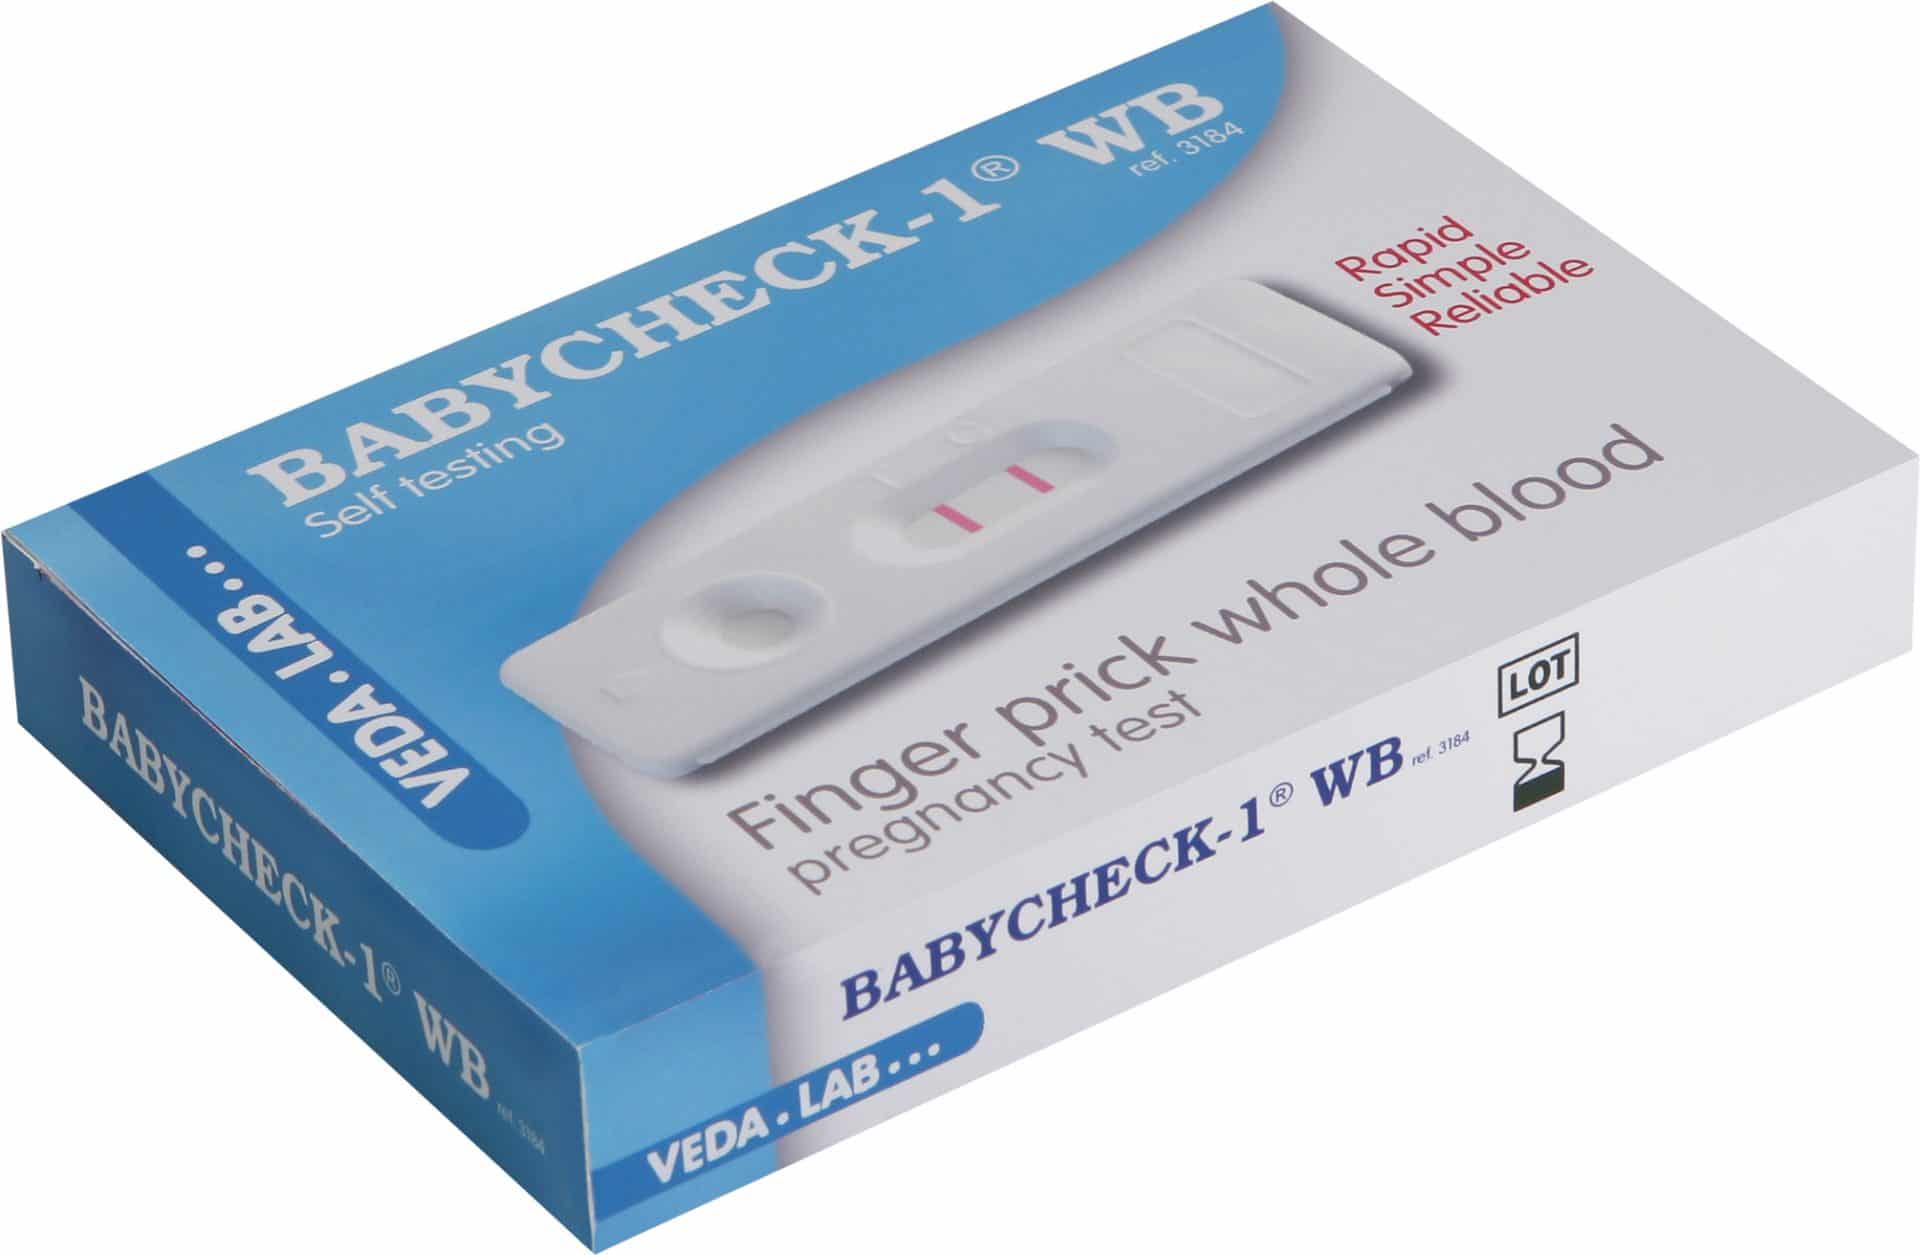 Babycheck-1® WB